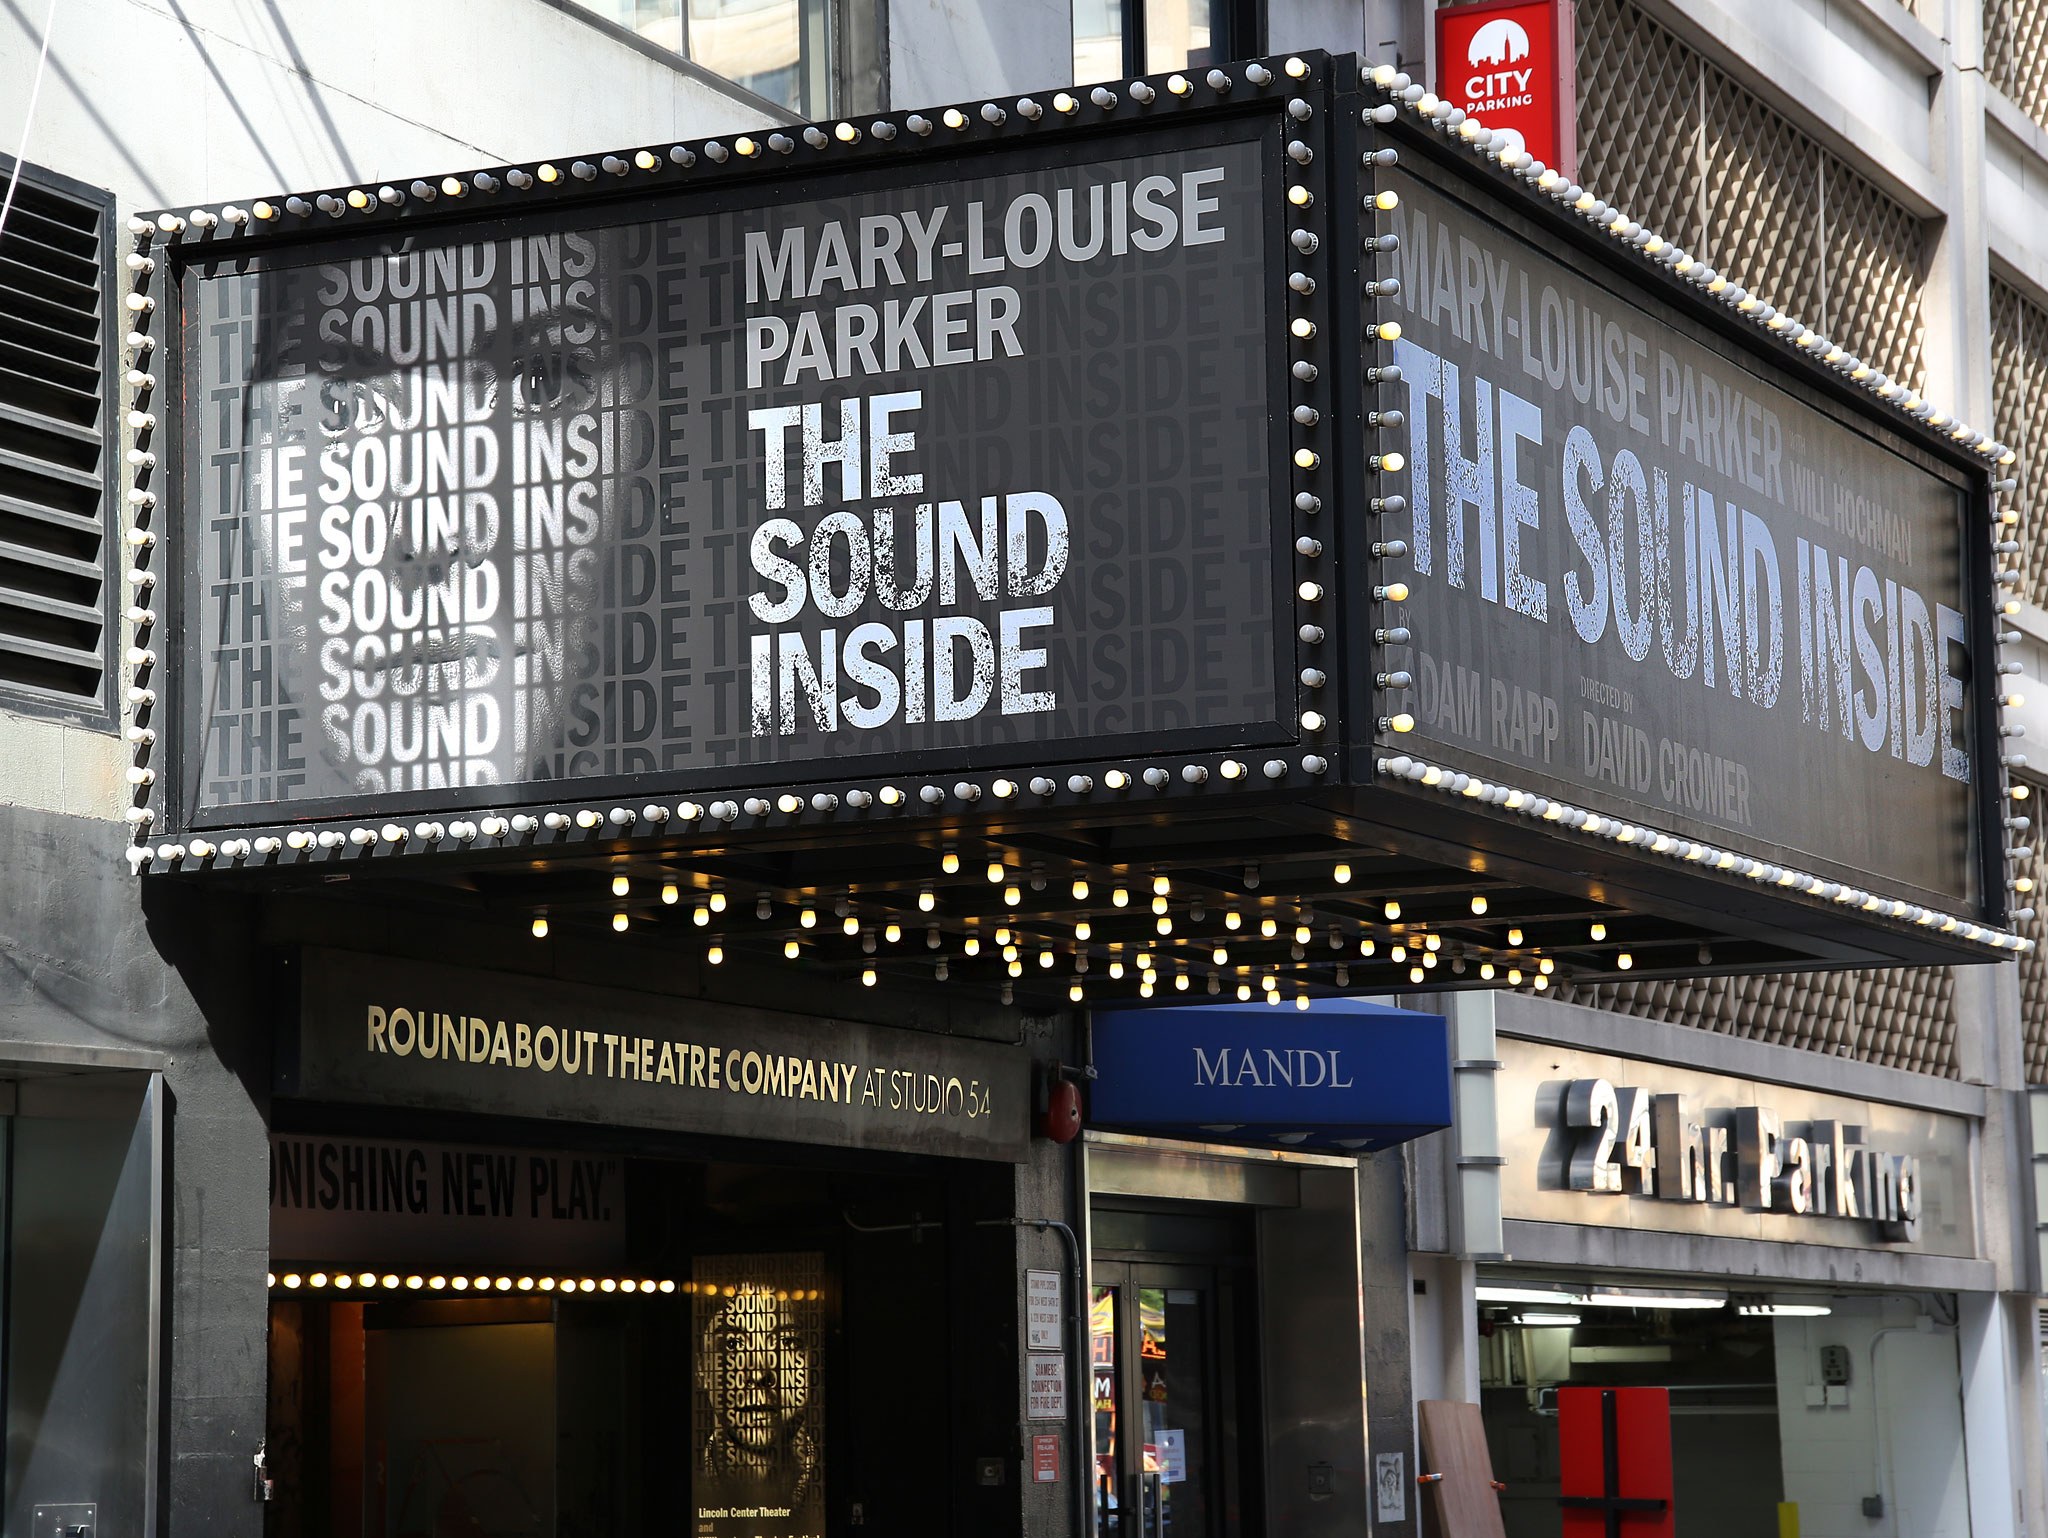 The Sound Inside Theatre Marquee at Studio 54